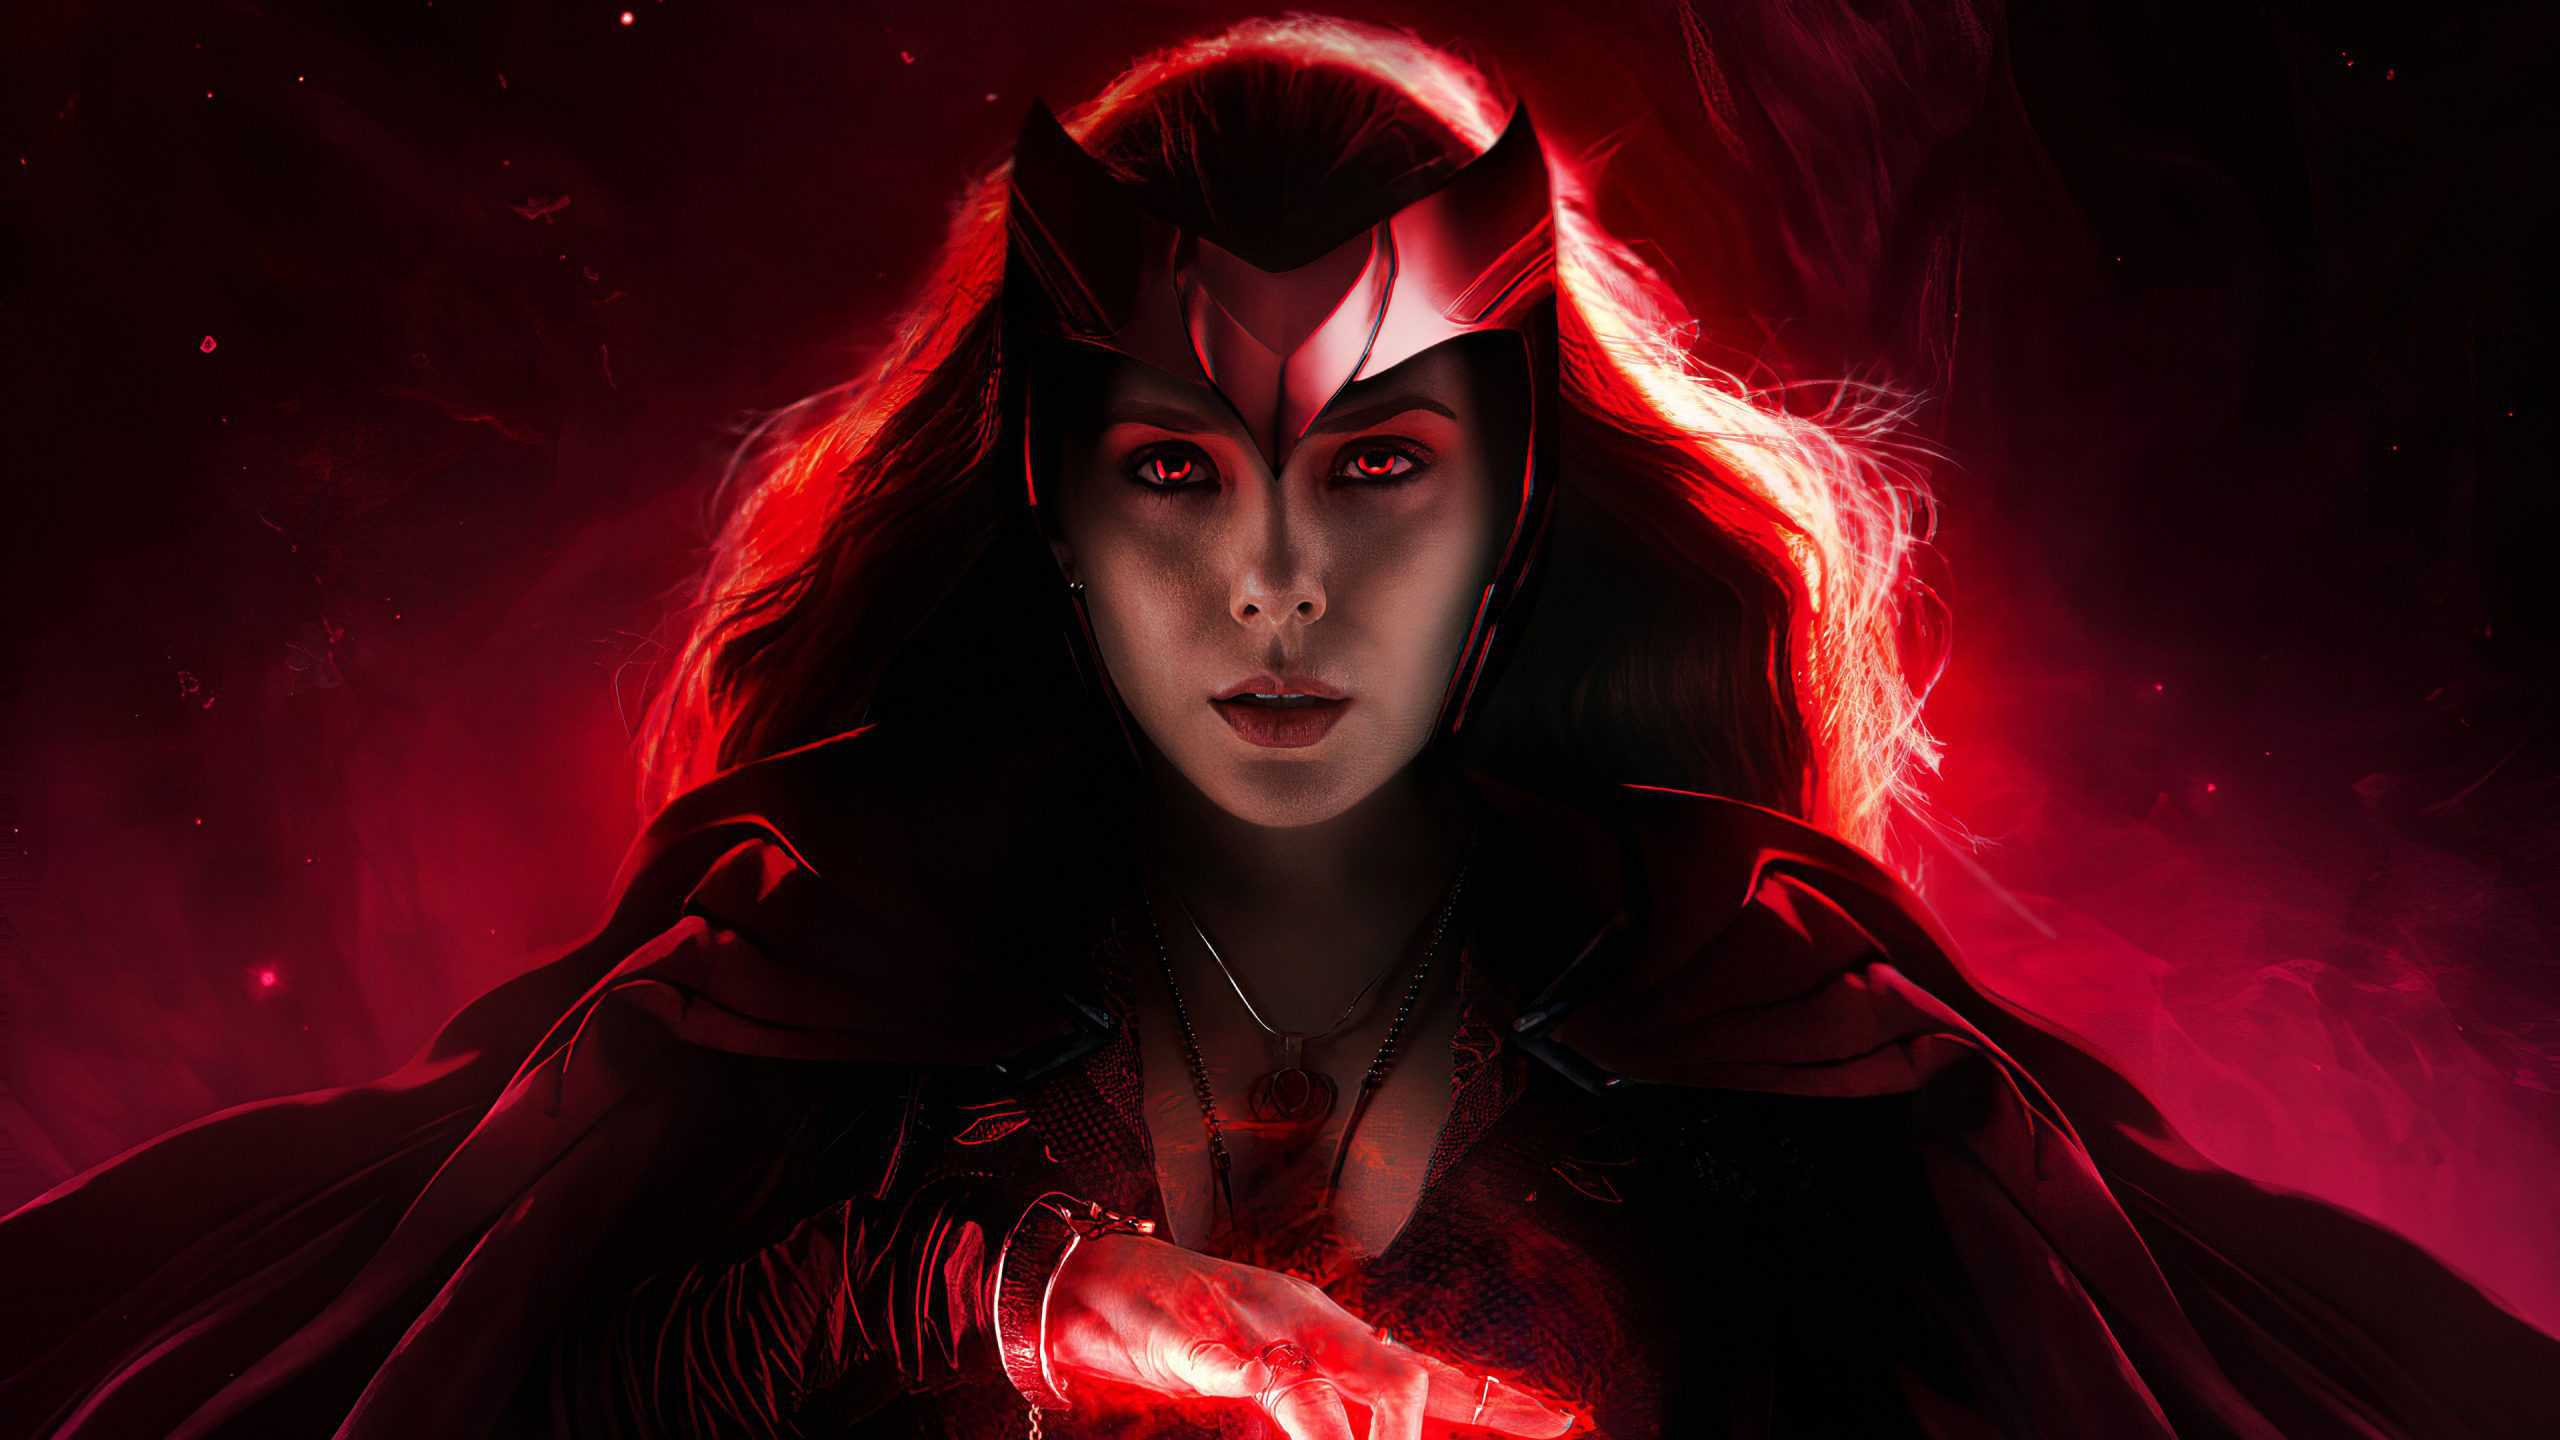 Wanda maximoff as Scarlet Witch in Wanda vision 